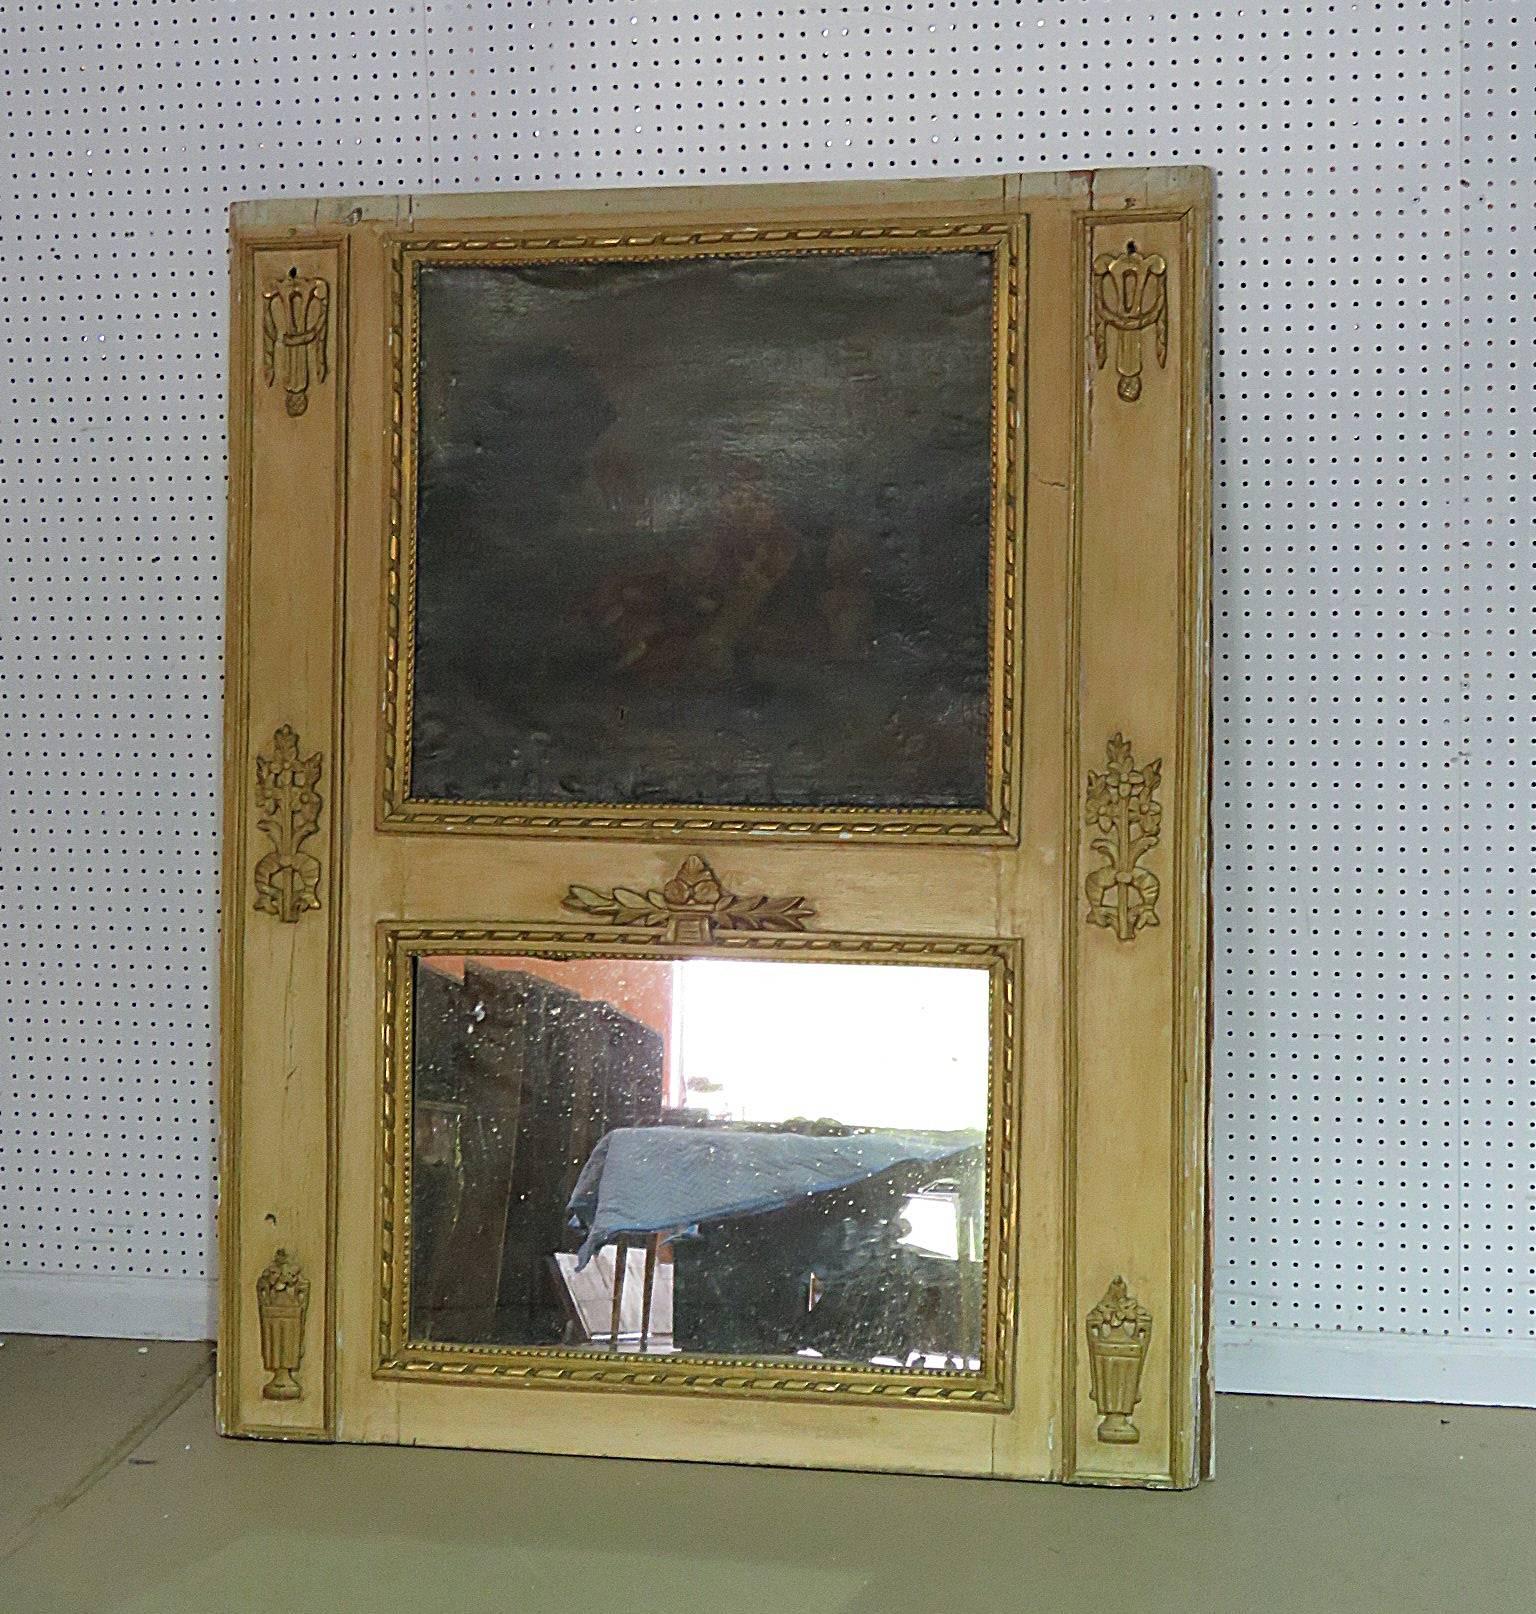 Antique 18th century French Louis XVI style trumeau mirror with gilt trim.